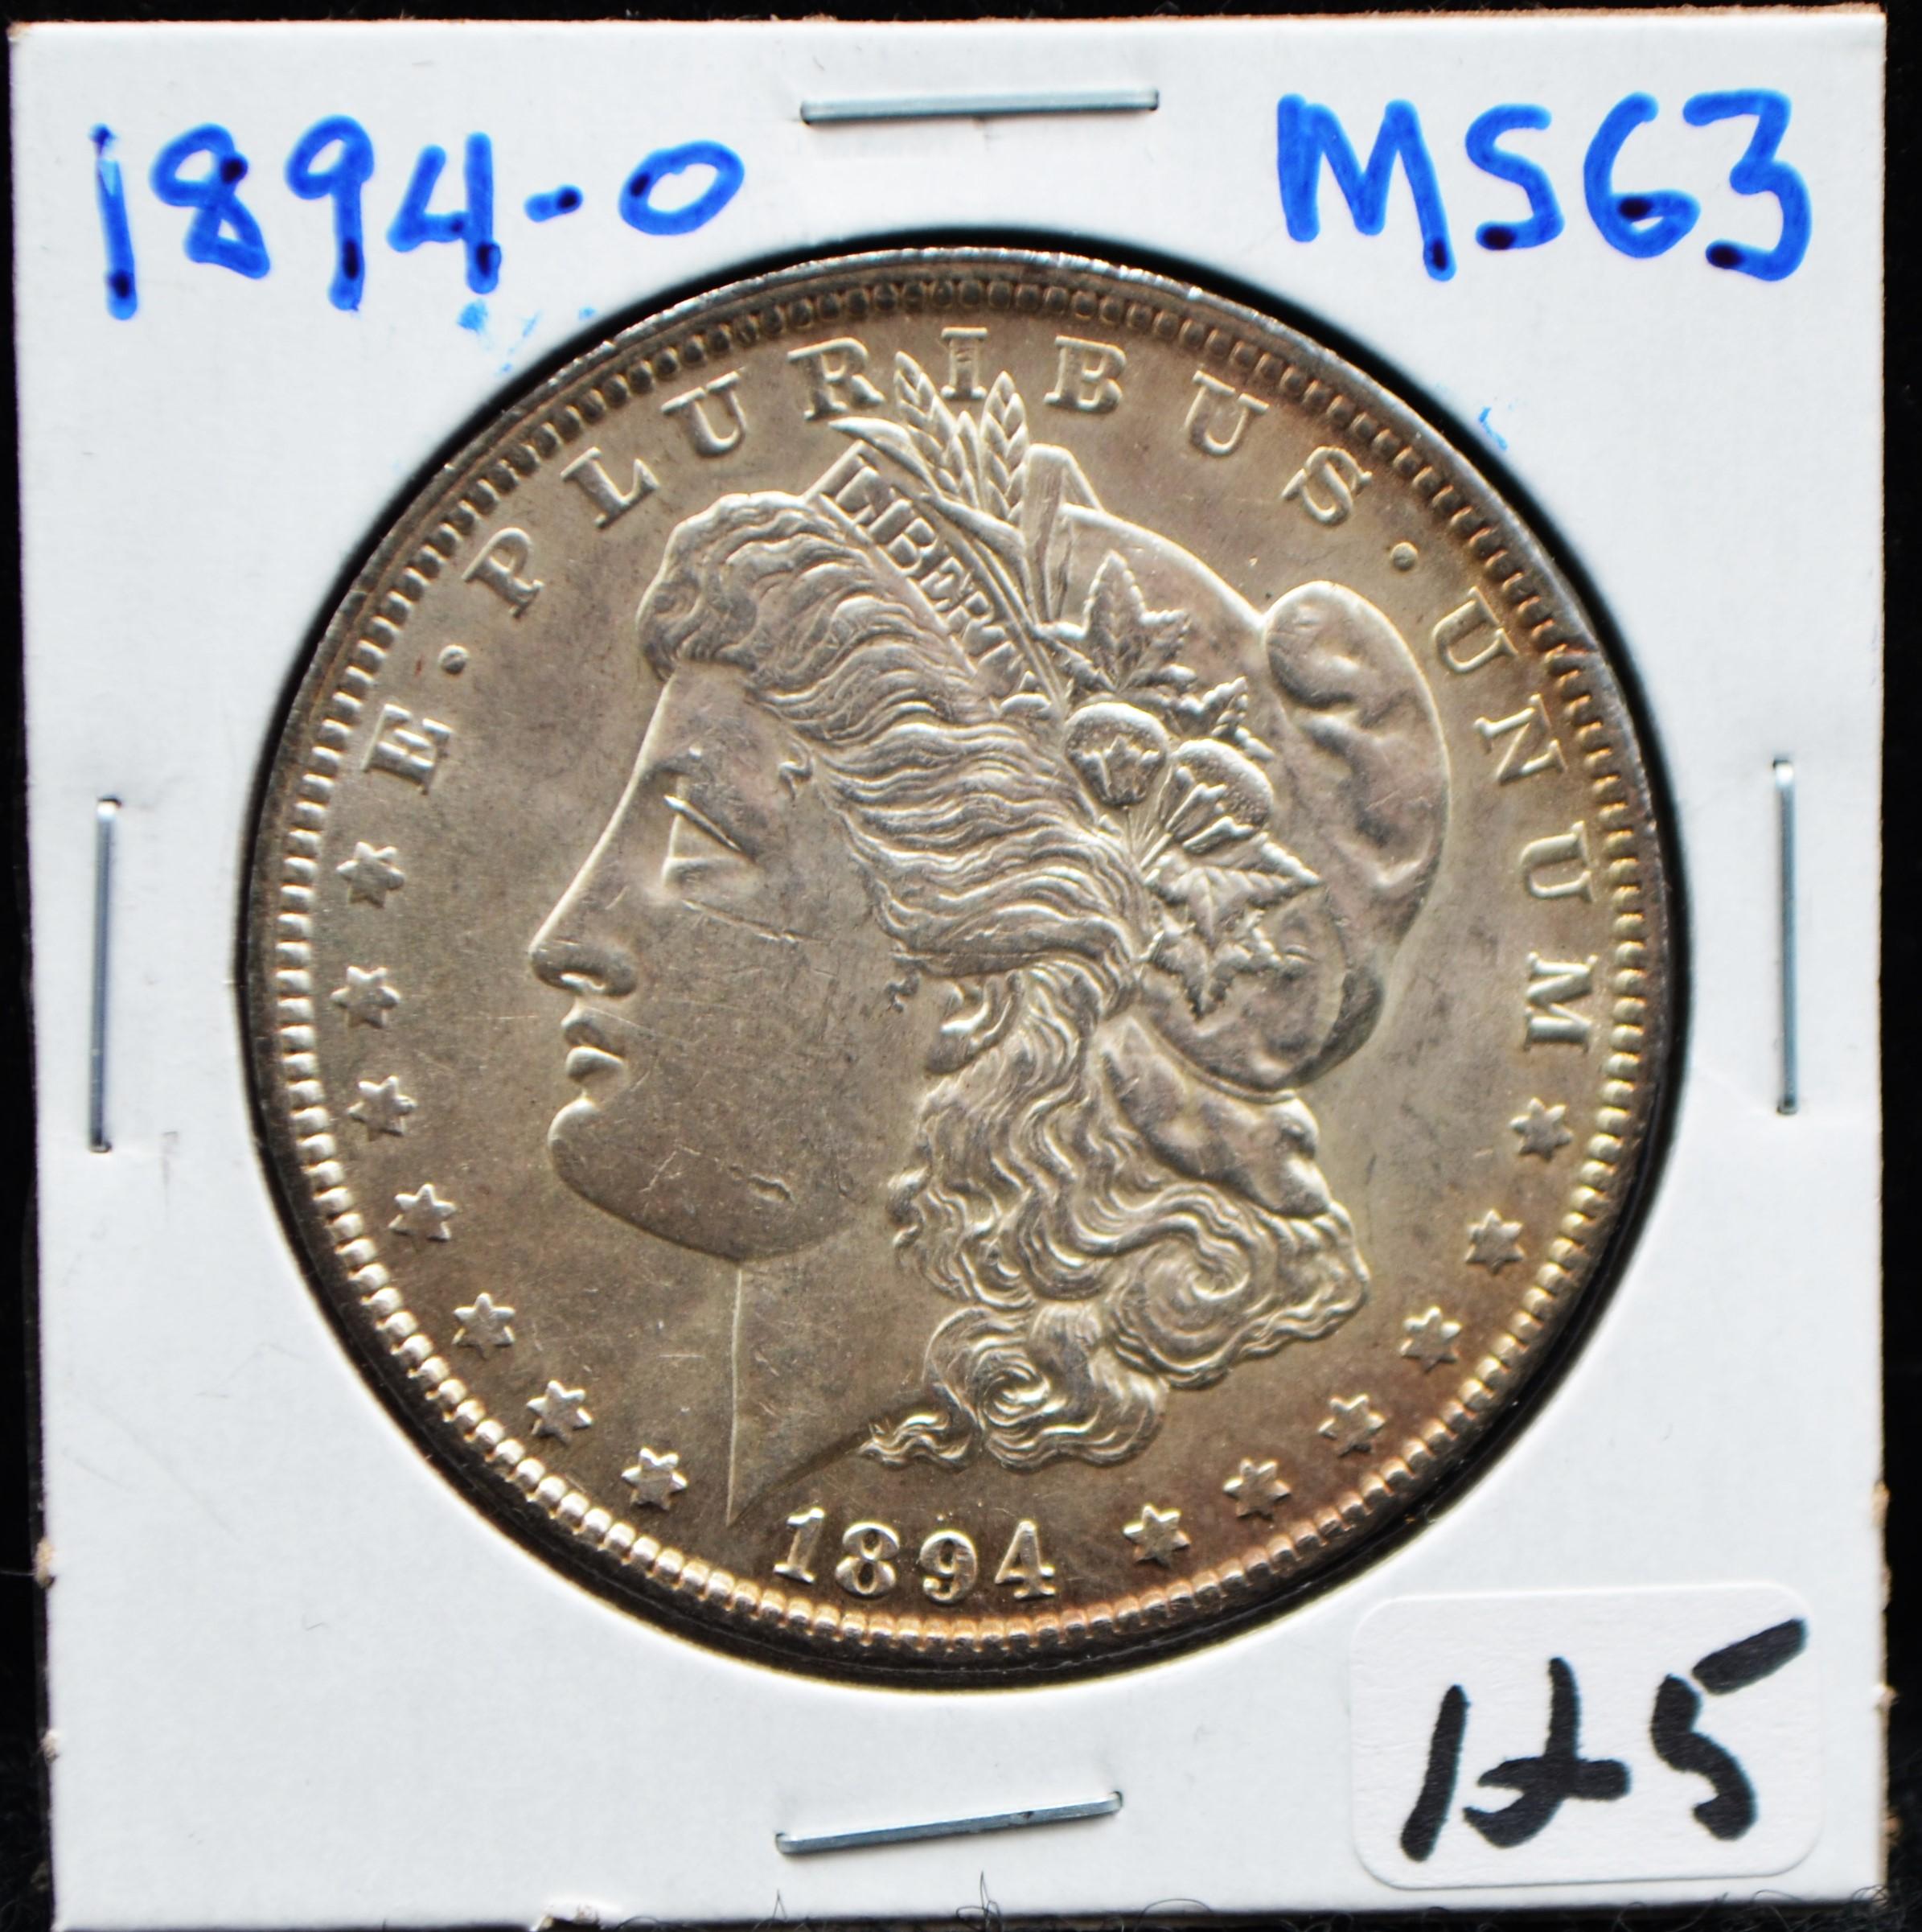 SCARCE 1894-0 MORGAN DOLLAR